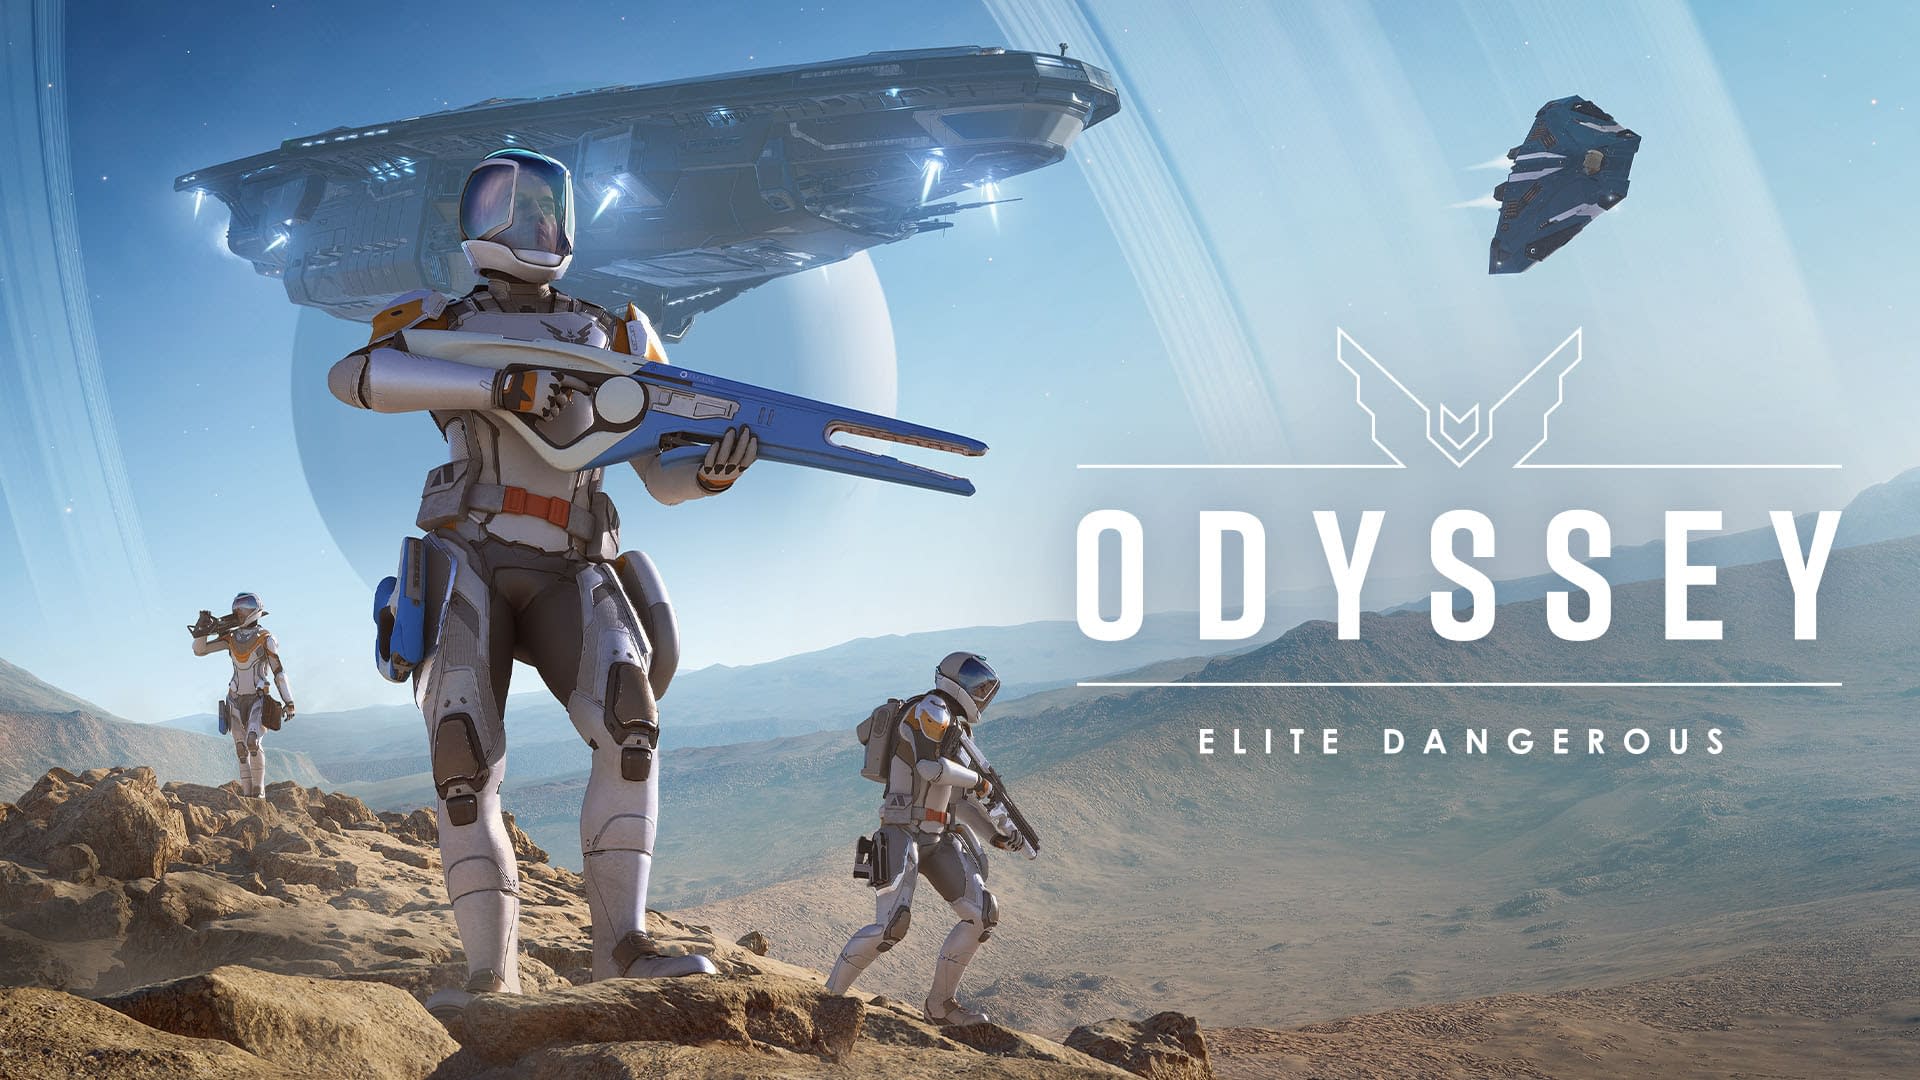 Elite Dangerous: Odyssey arrives on PC May 19